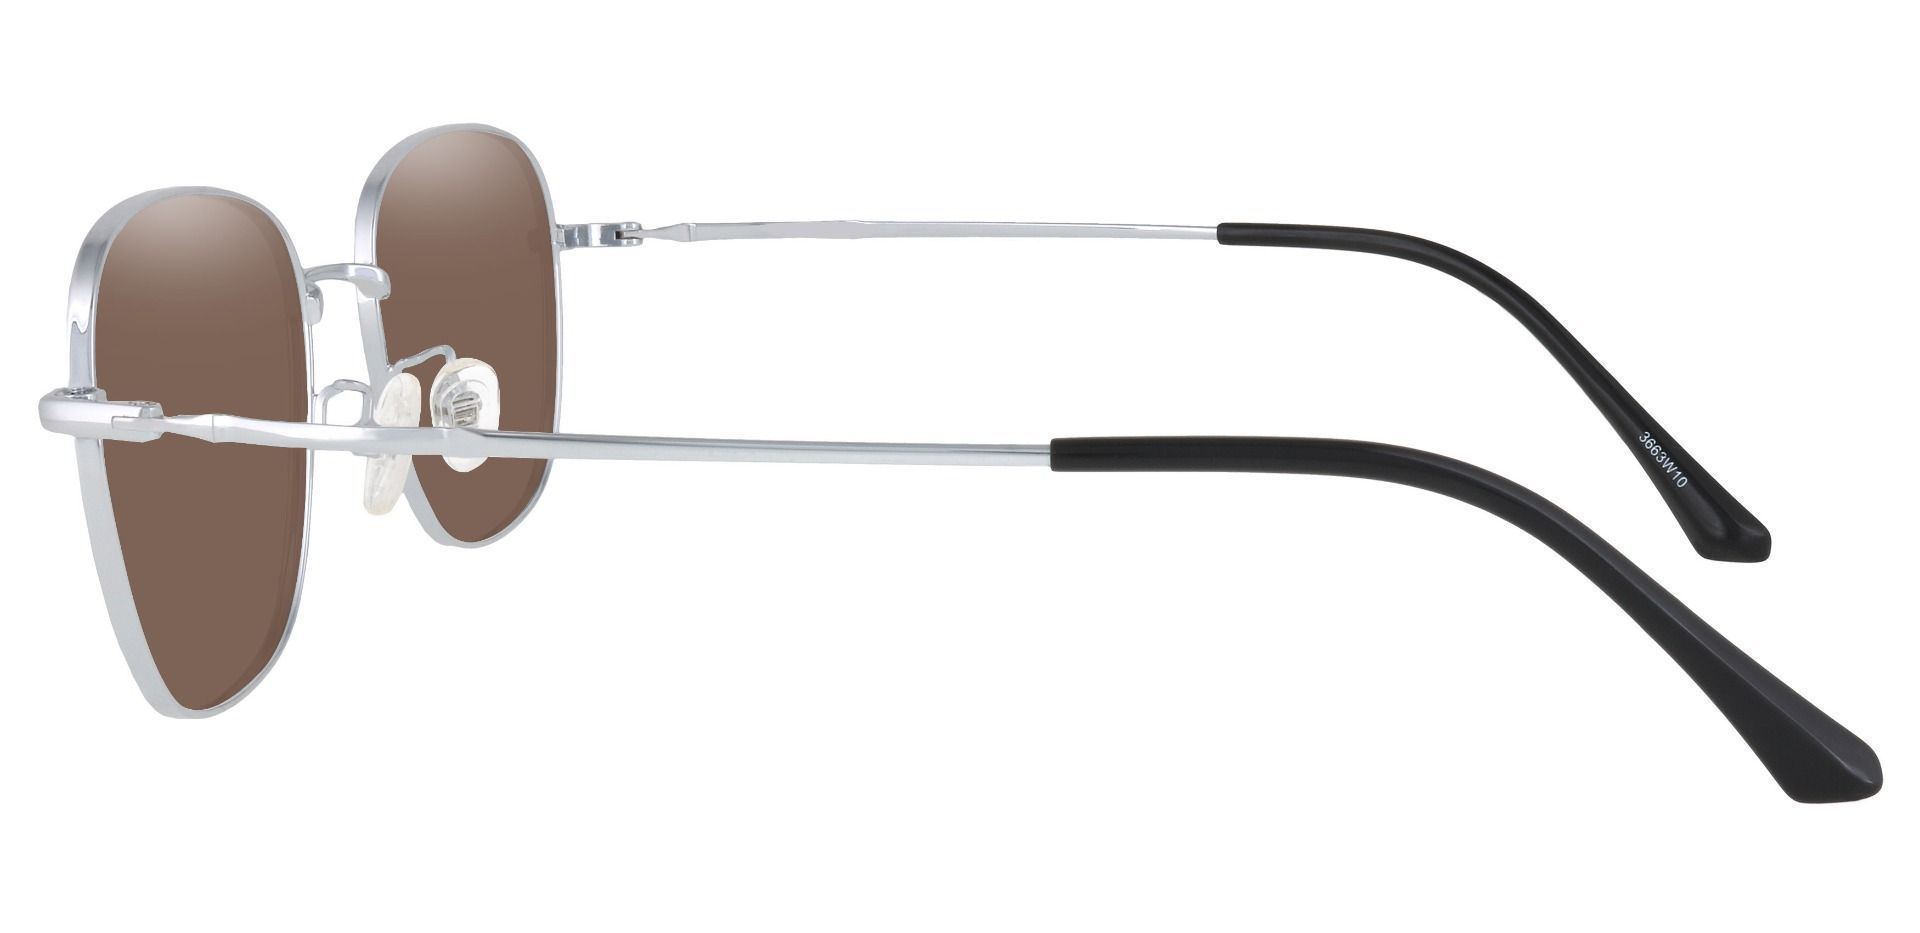 Fresno Square Prescription Sunglasses - Silver Frame With Brown Lenses